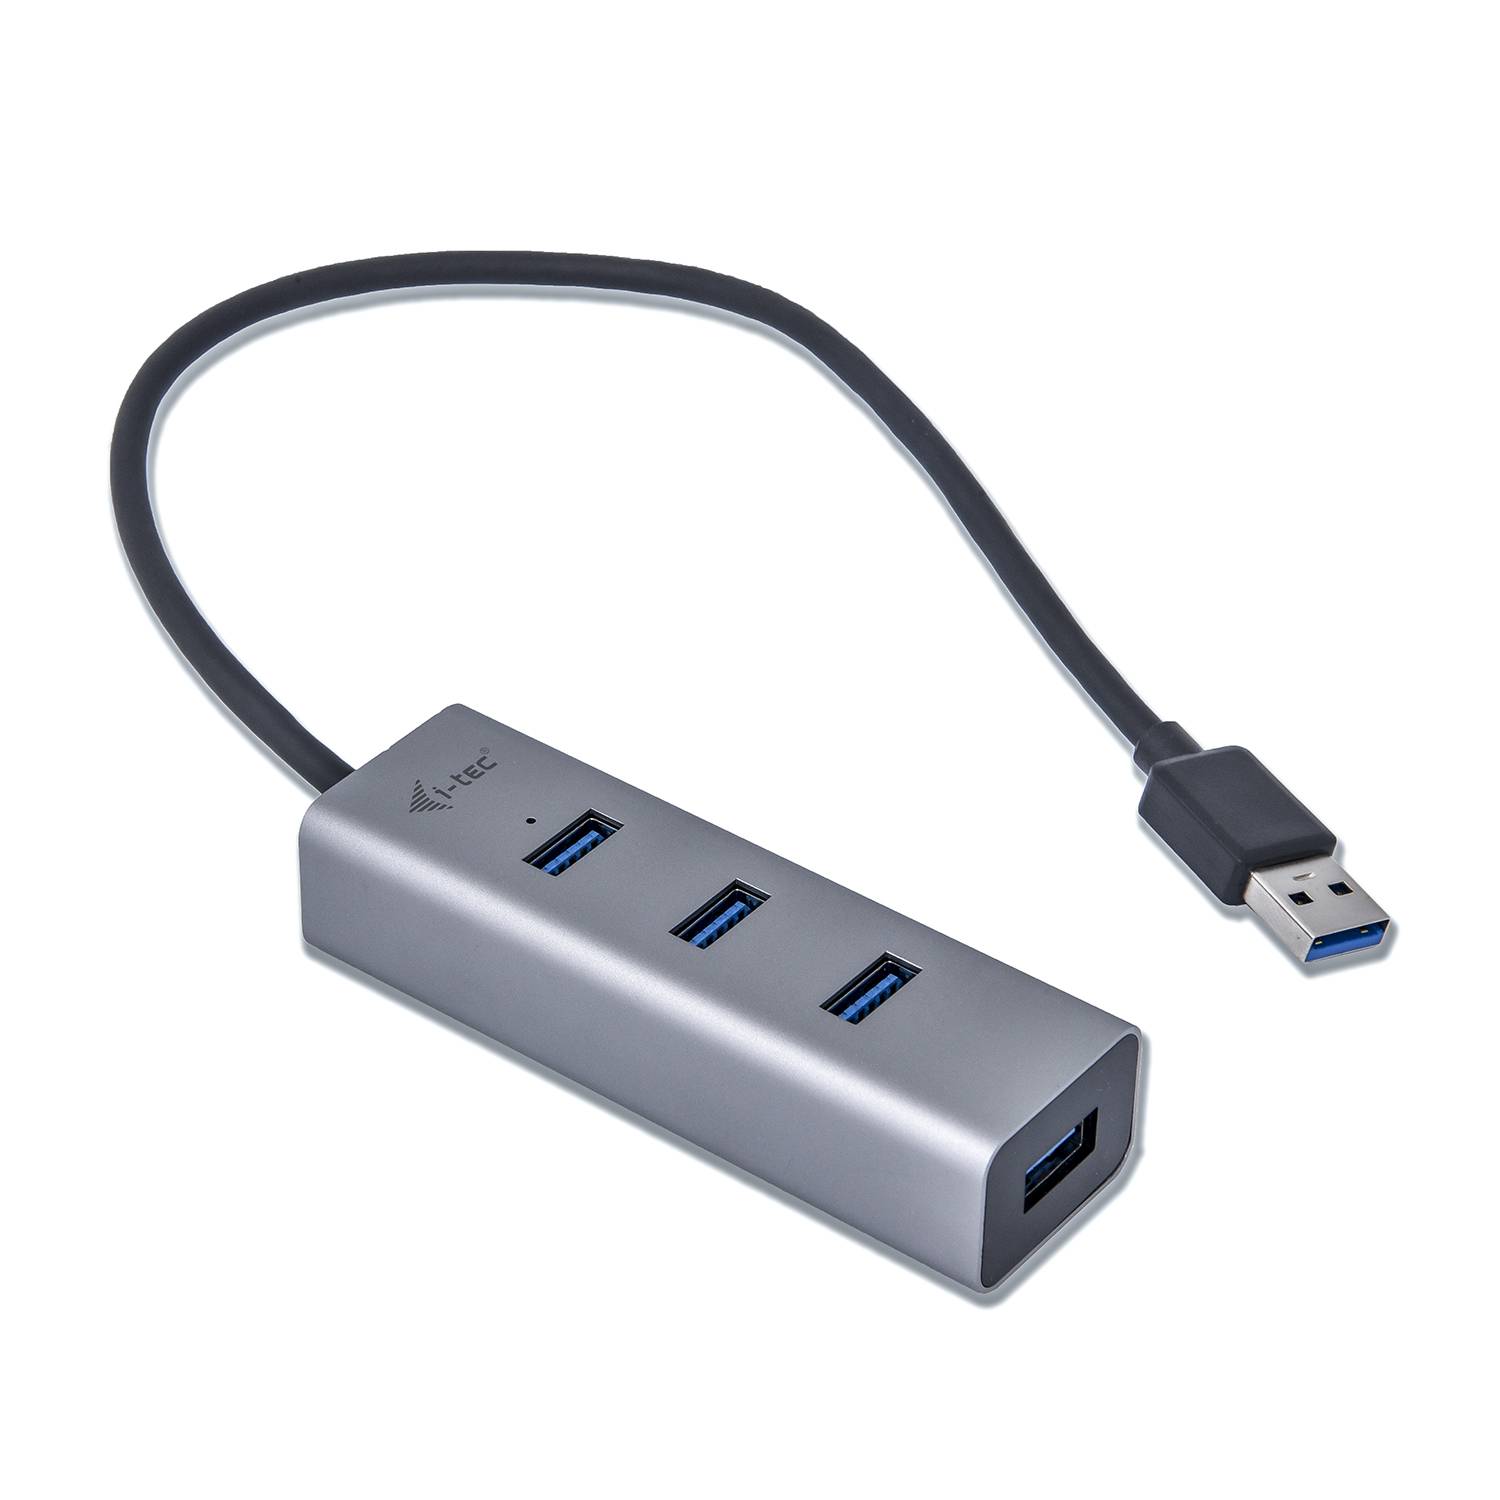 Rca Informatique - image du produit : I-TEC USB 3.0 METAL 4-PORT HUB I-TEC USB 3.0 METAL 4-PORT HUB